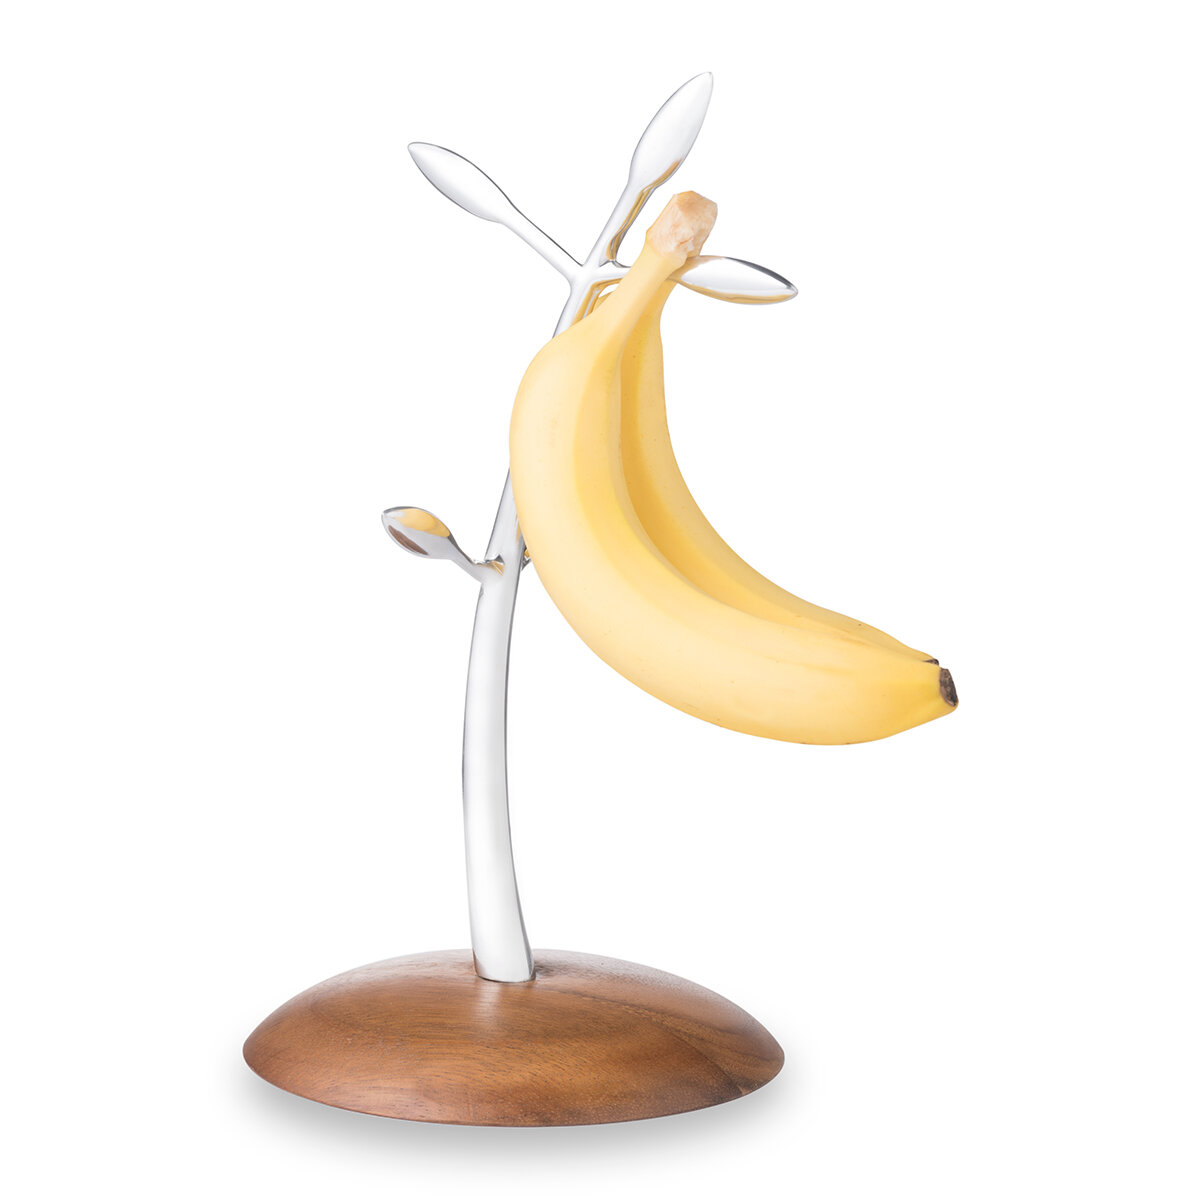 ES_Vine collection_0009_Vine mug, banana w banana's - 3015.jpg